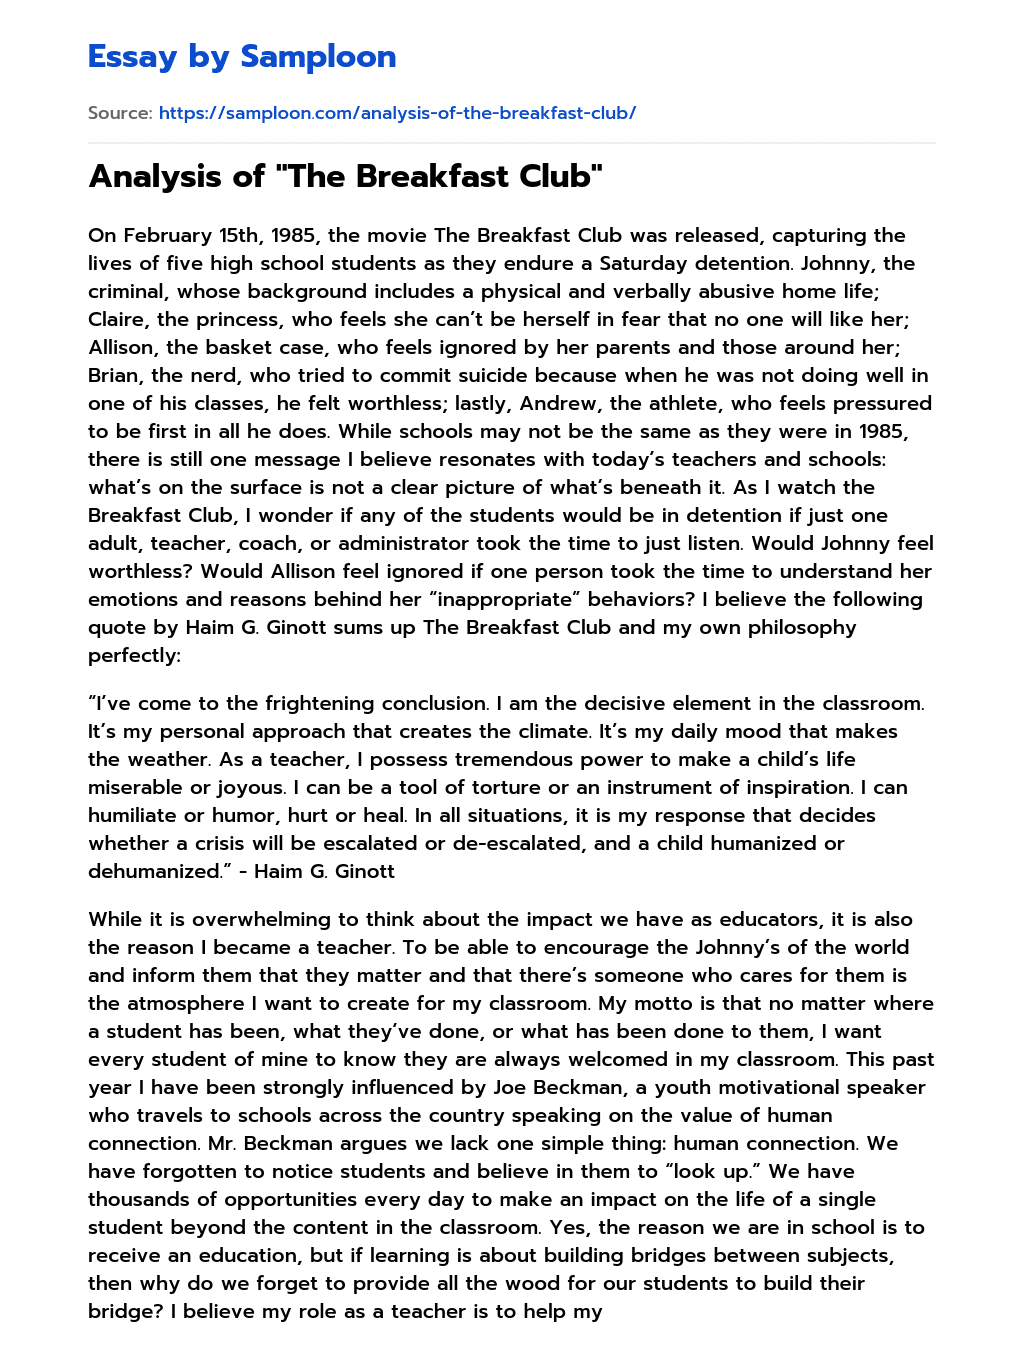 Analysis of “The Breakfast Club” essay